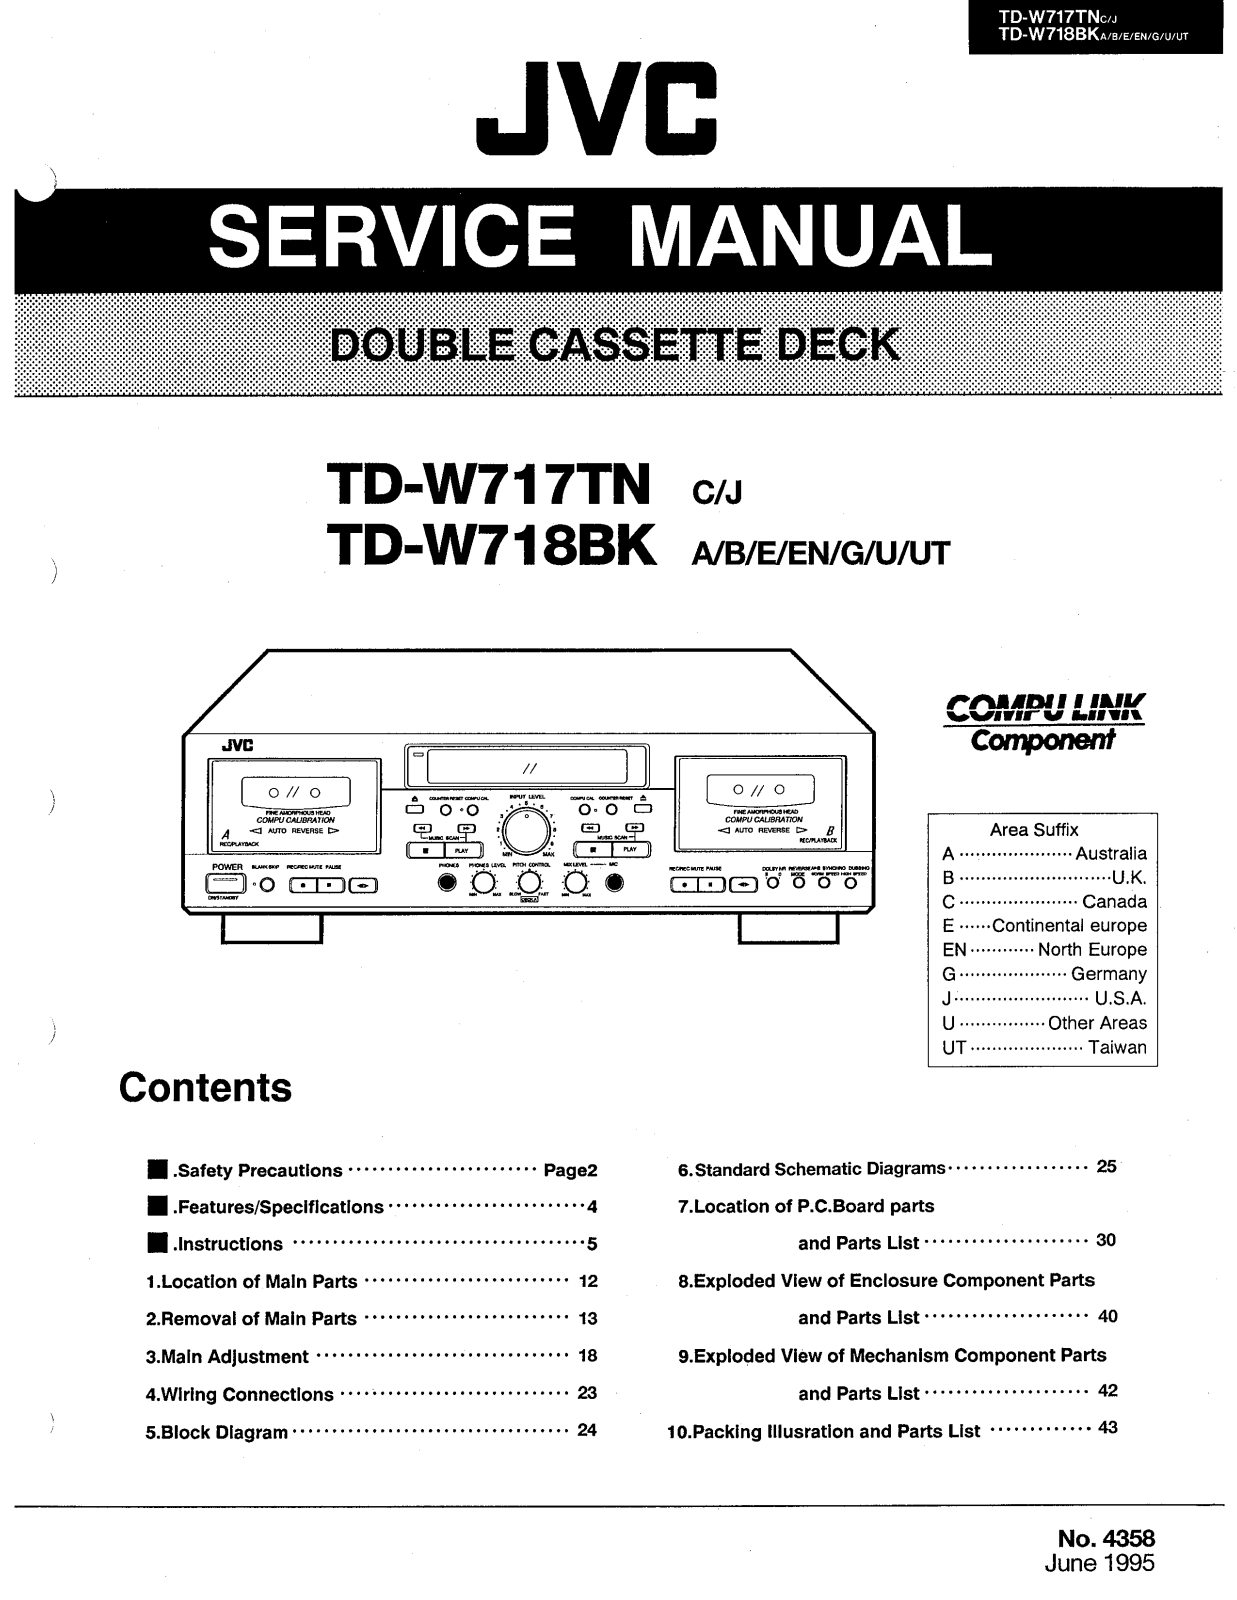 JVC TD-W717TNC, TD-W717TNJ, TD-W718BKA, TD-W718BKB, TD-W718BKE Service Manual